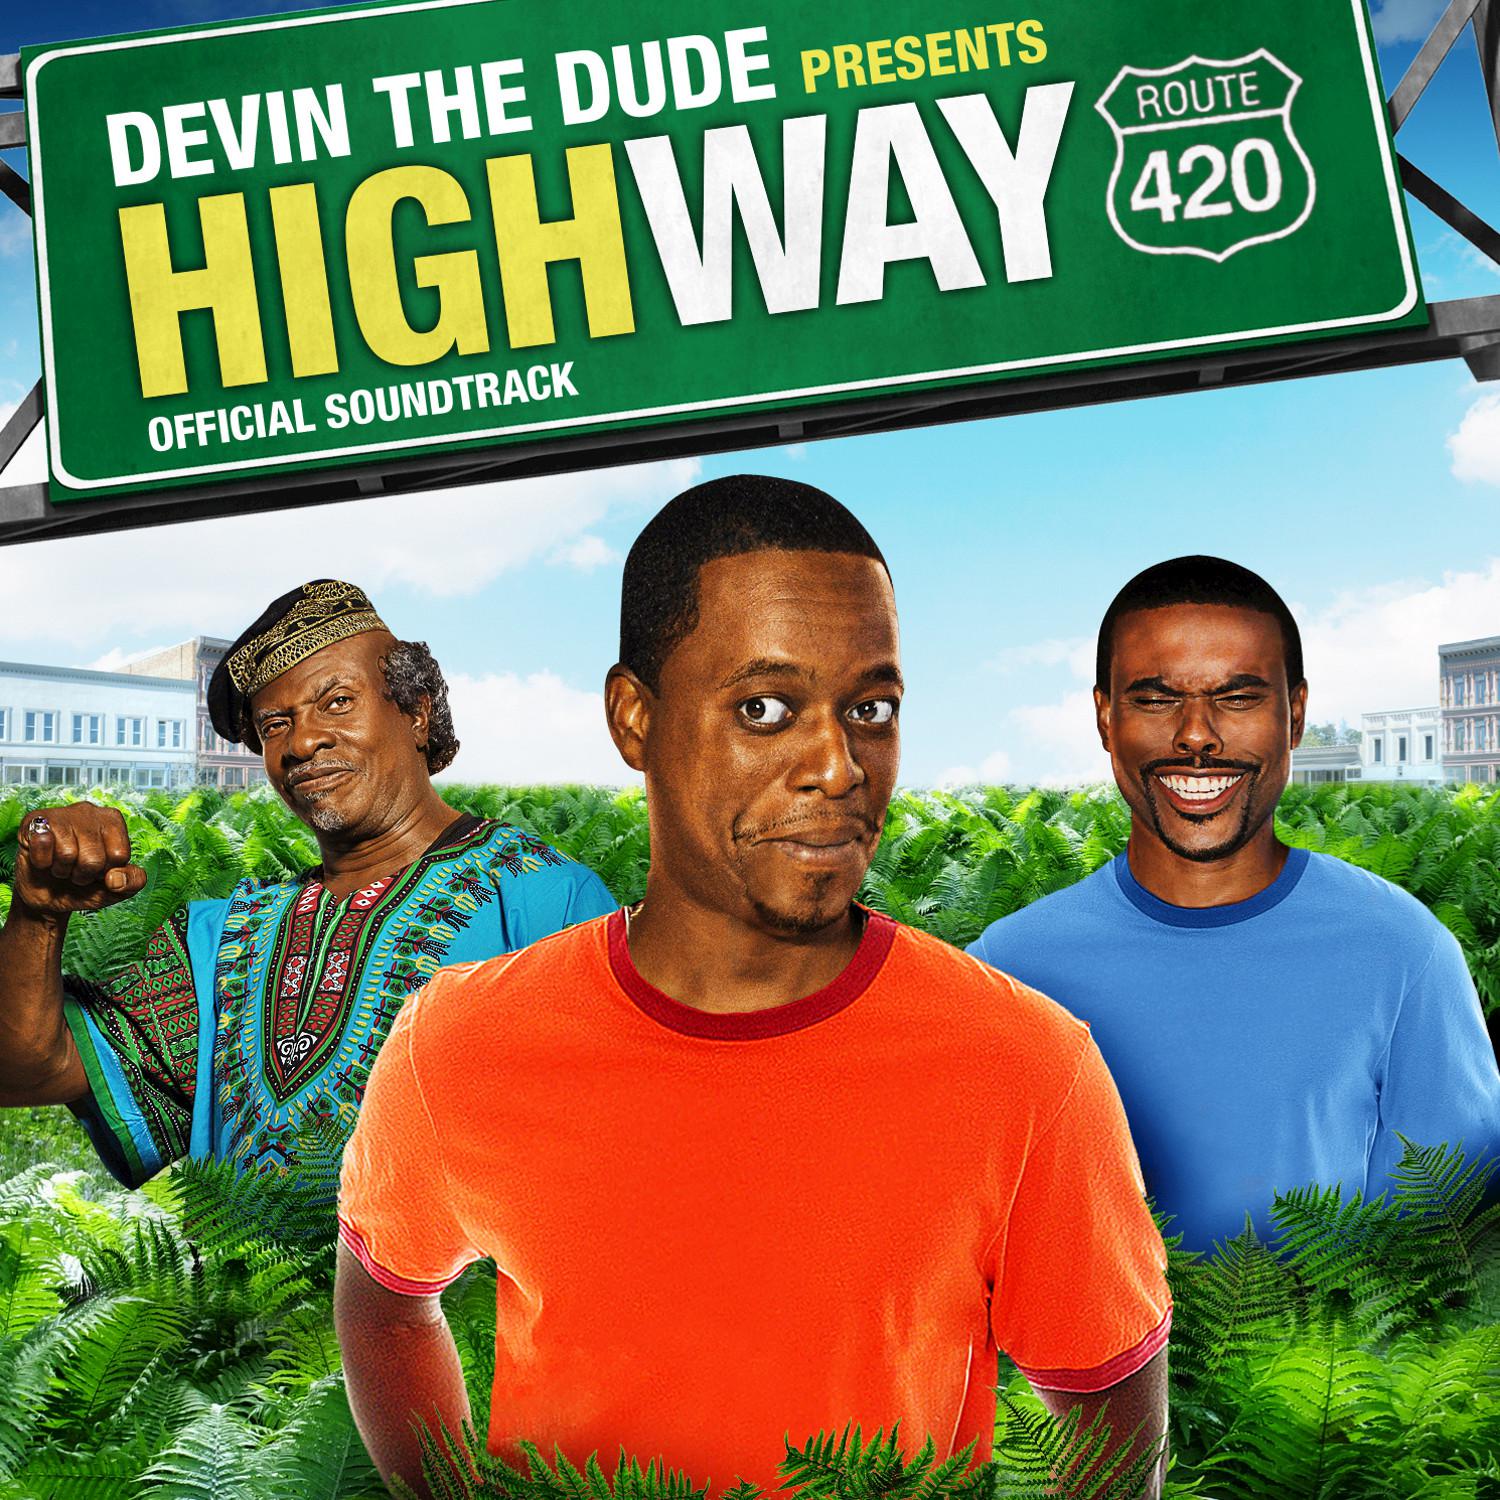 Devin The Dude Presents: Highway Soundtrack